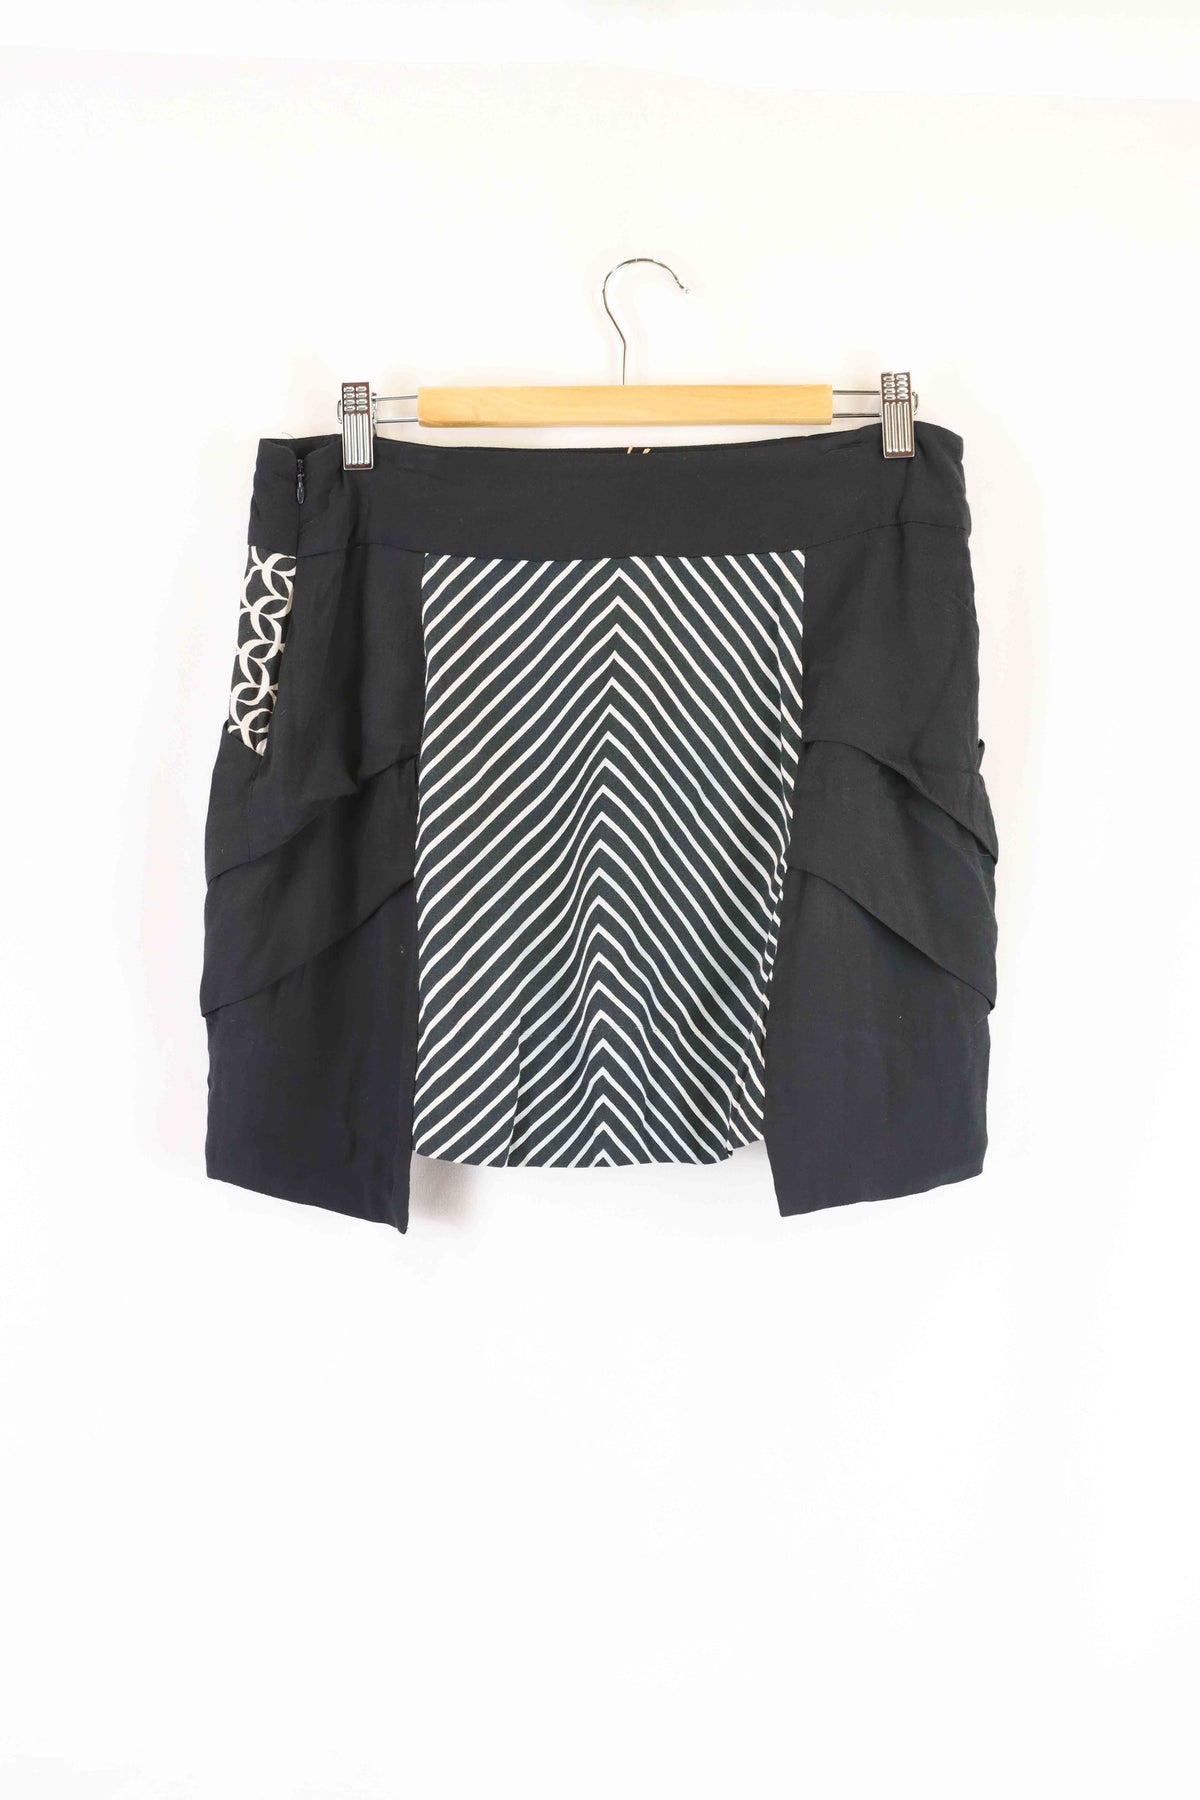 Sass &amp; Bide Black Printed Skirt 10